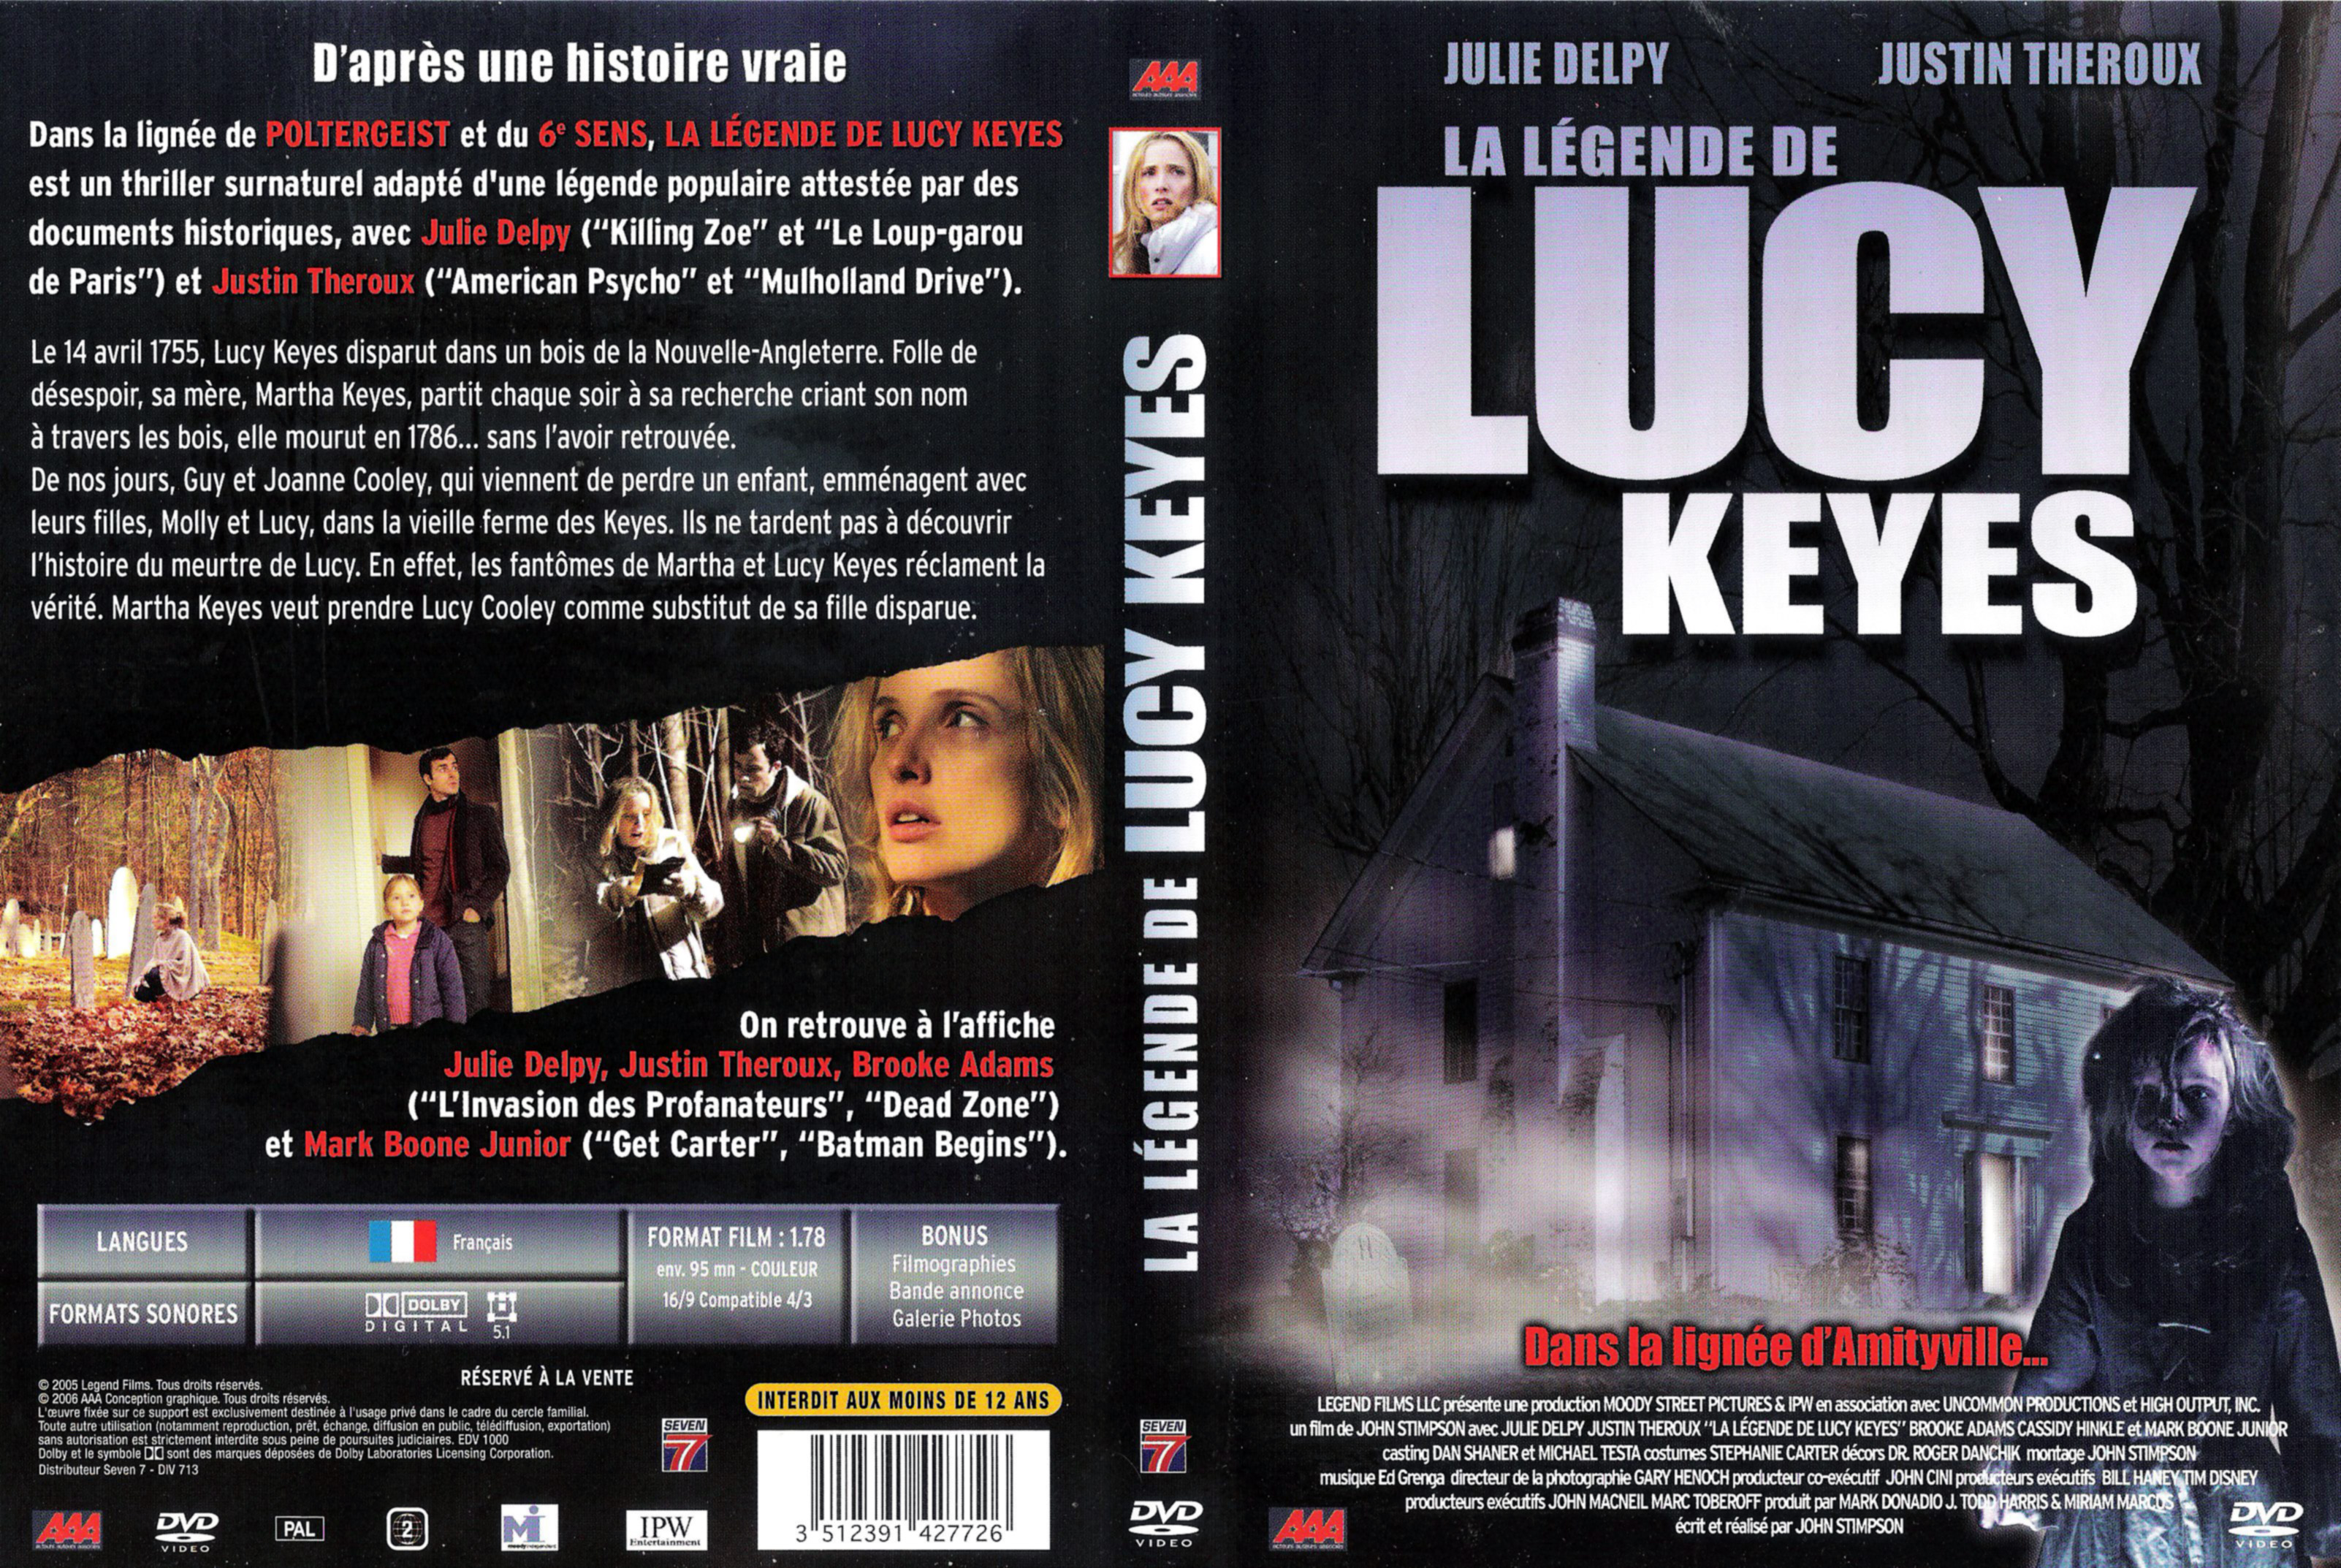 Jaquette DVD La lgende de Lucy Keyes v2